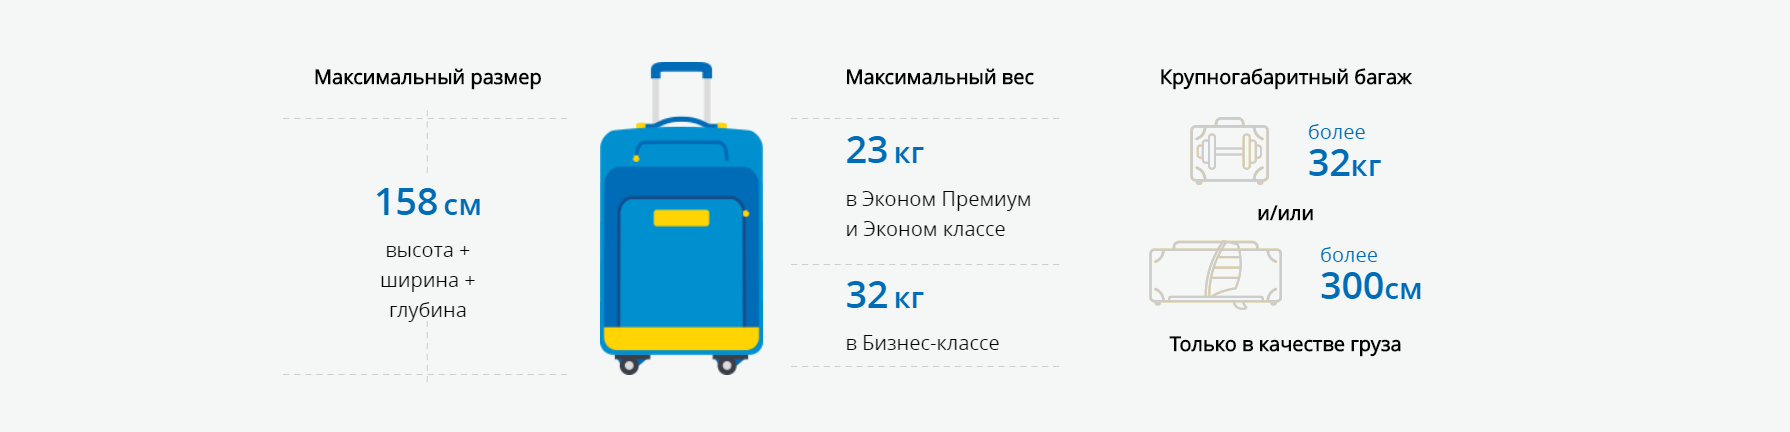 Аэрофлот вес багажа на 1. Габариты ручной клади 158 см. Багаж 23 кг габариты чемодана. Габариты багажа Аэрофлот 23 кг. Багаж сумма трех измерений 158см.